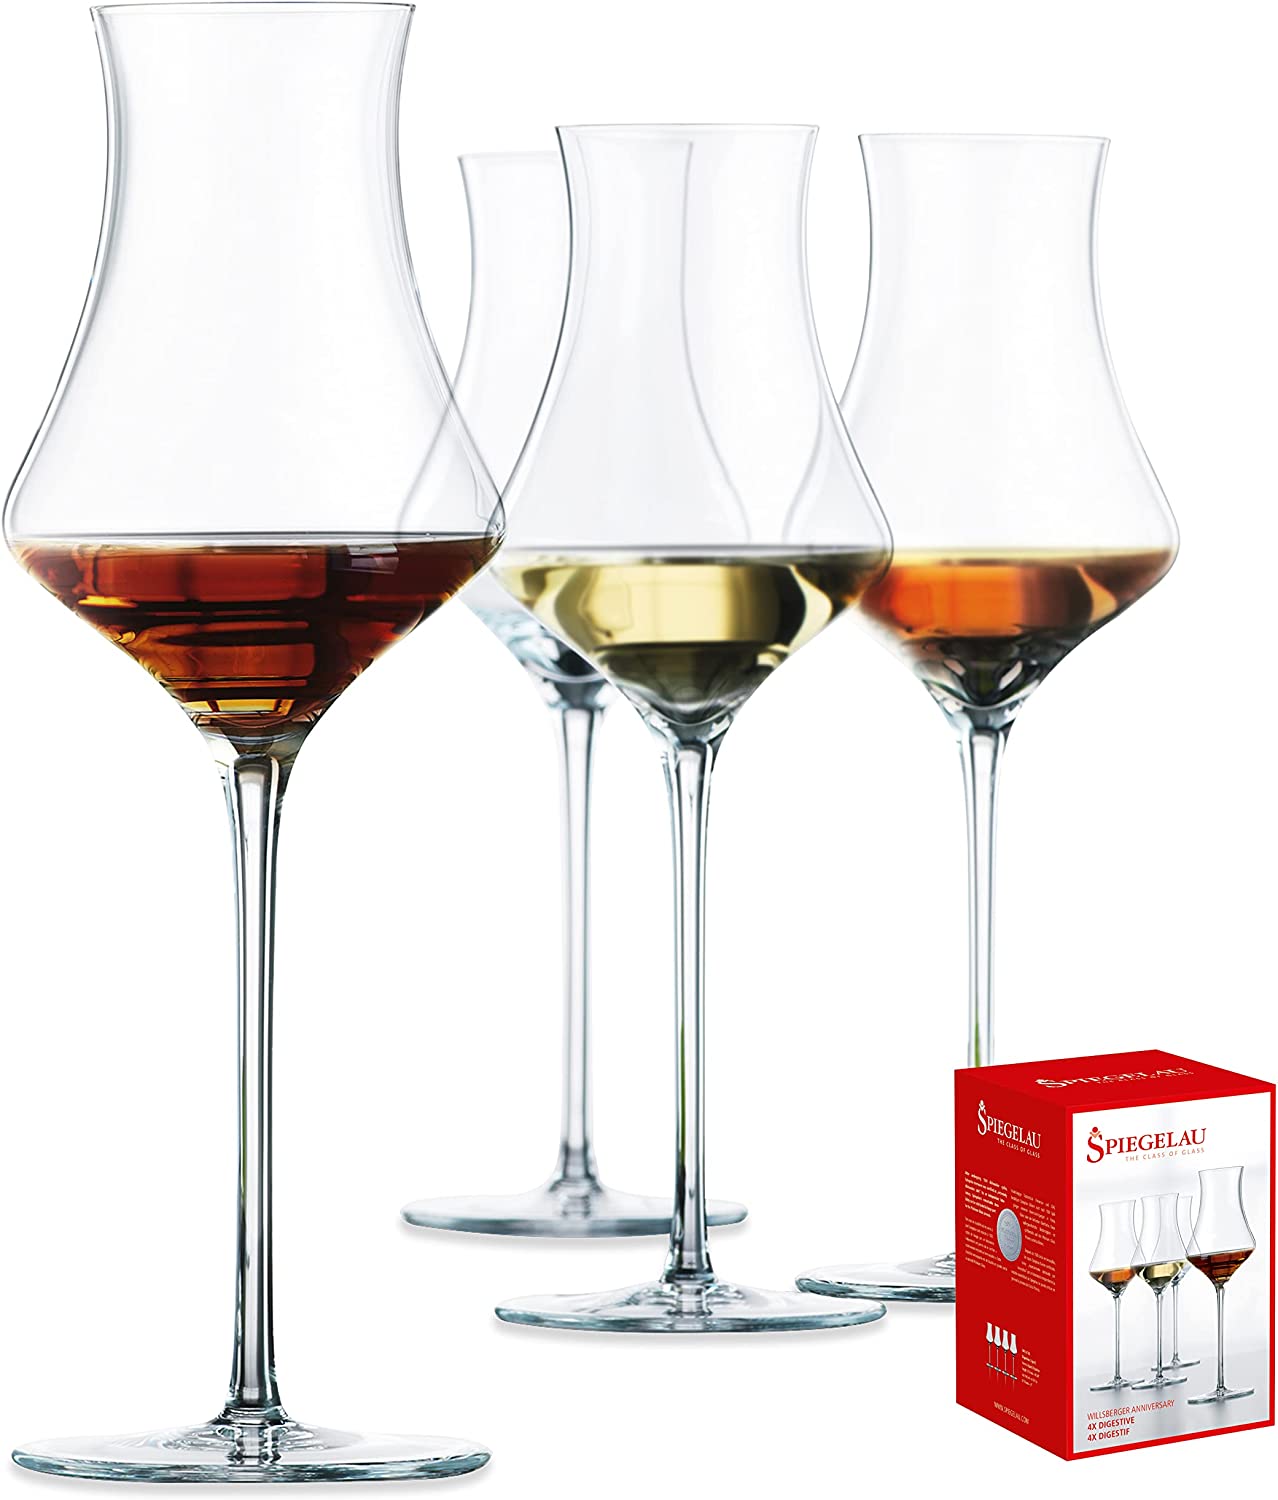 Spiegelau & Nachtmann Spiegelau Willsberger 1416176 Digestive Glasses Set of 4 Crystal Clear